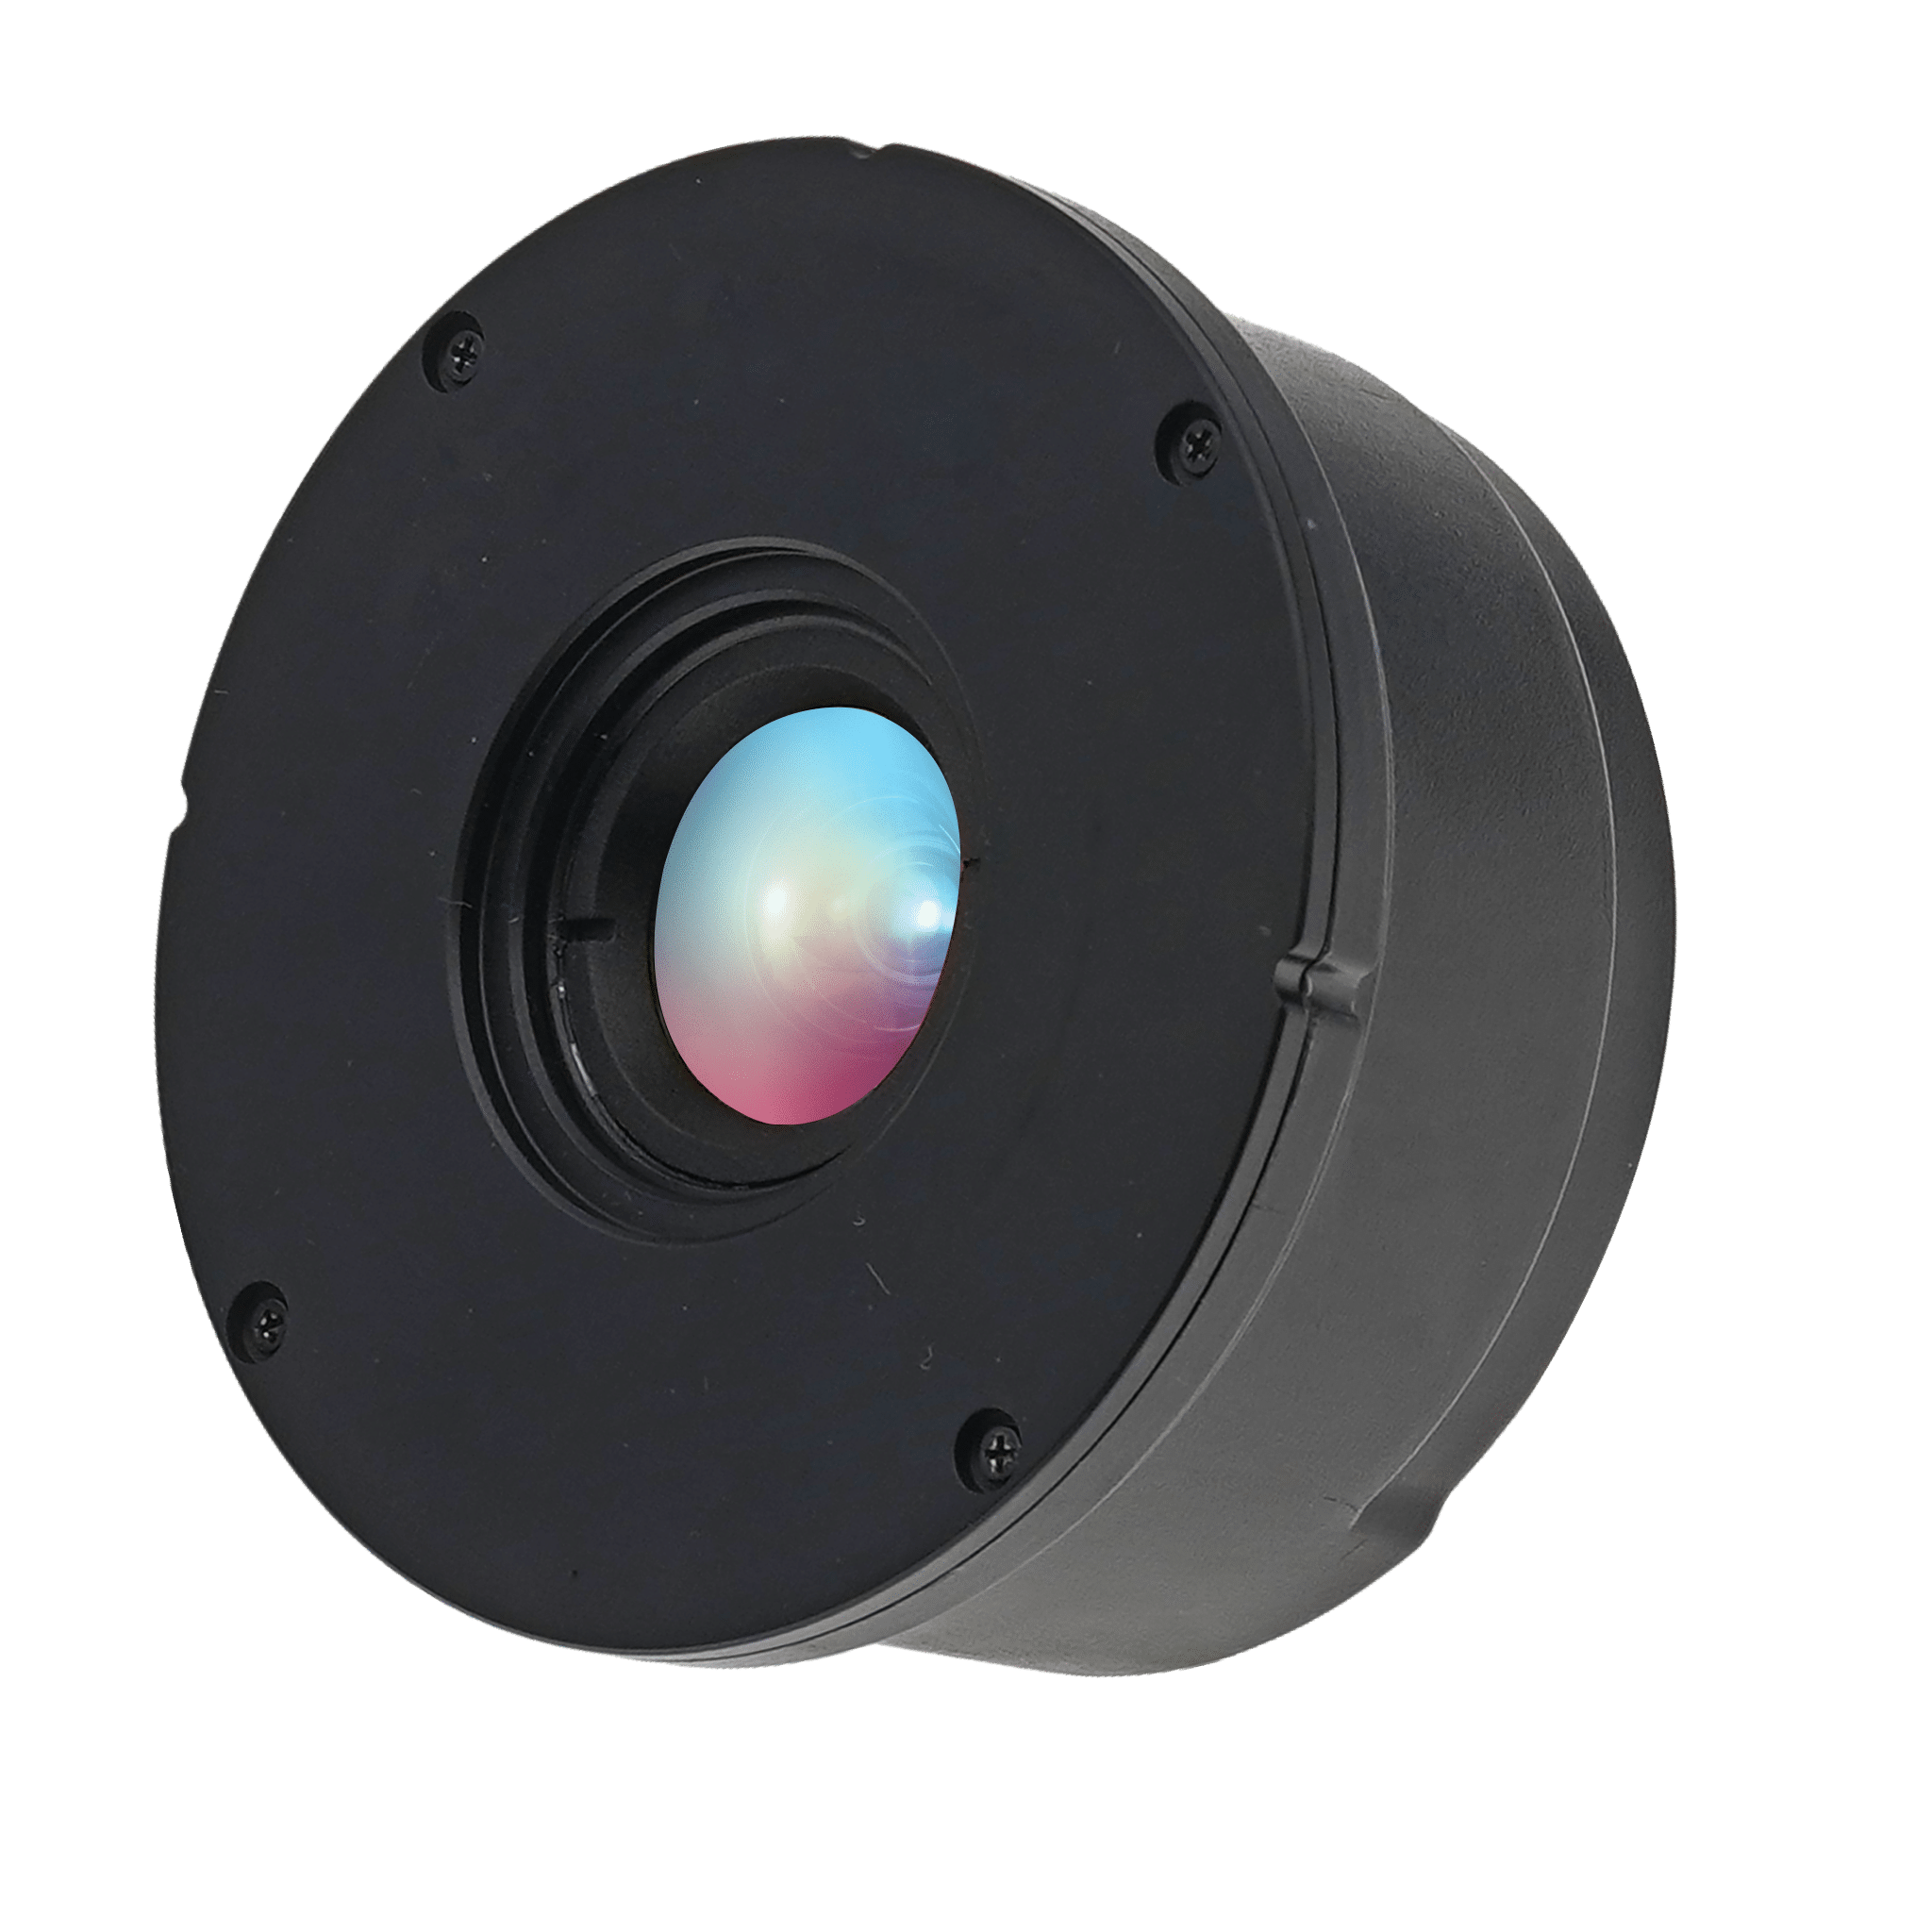 Viper P1280 and P640 handheld thermal camera - wide angle lens